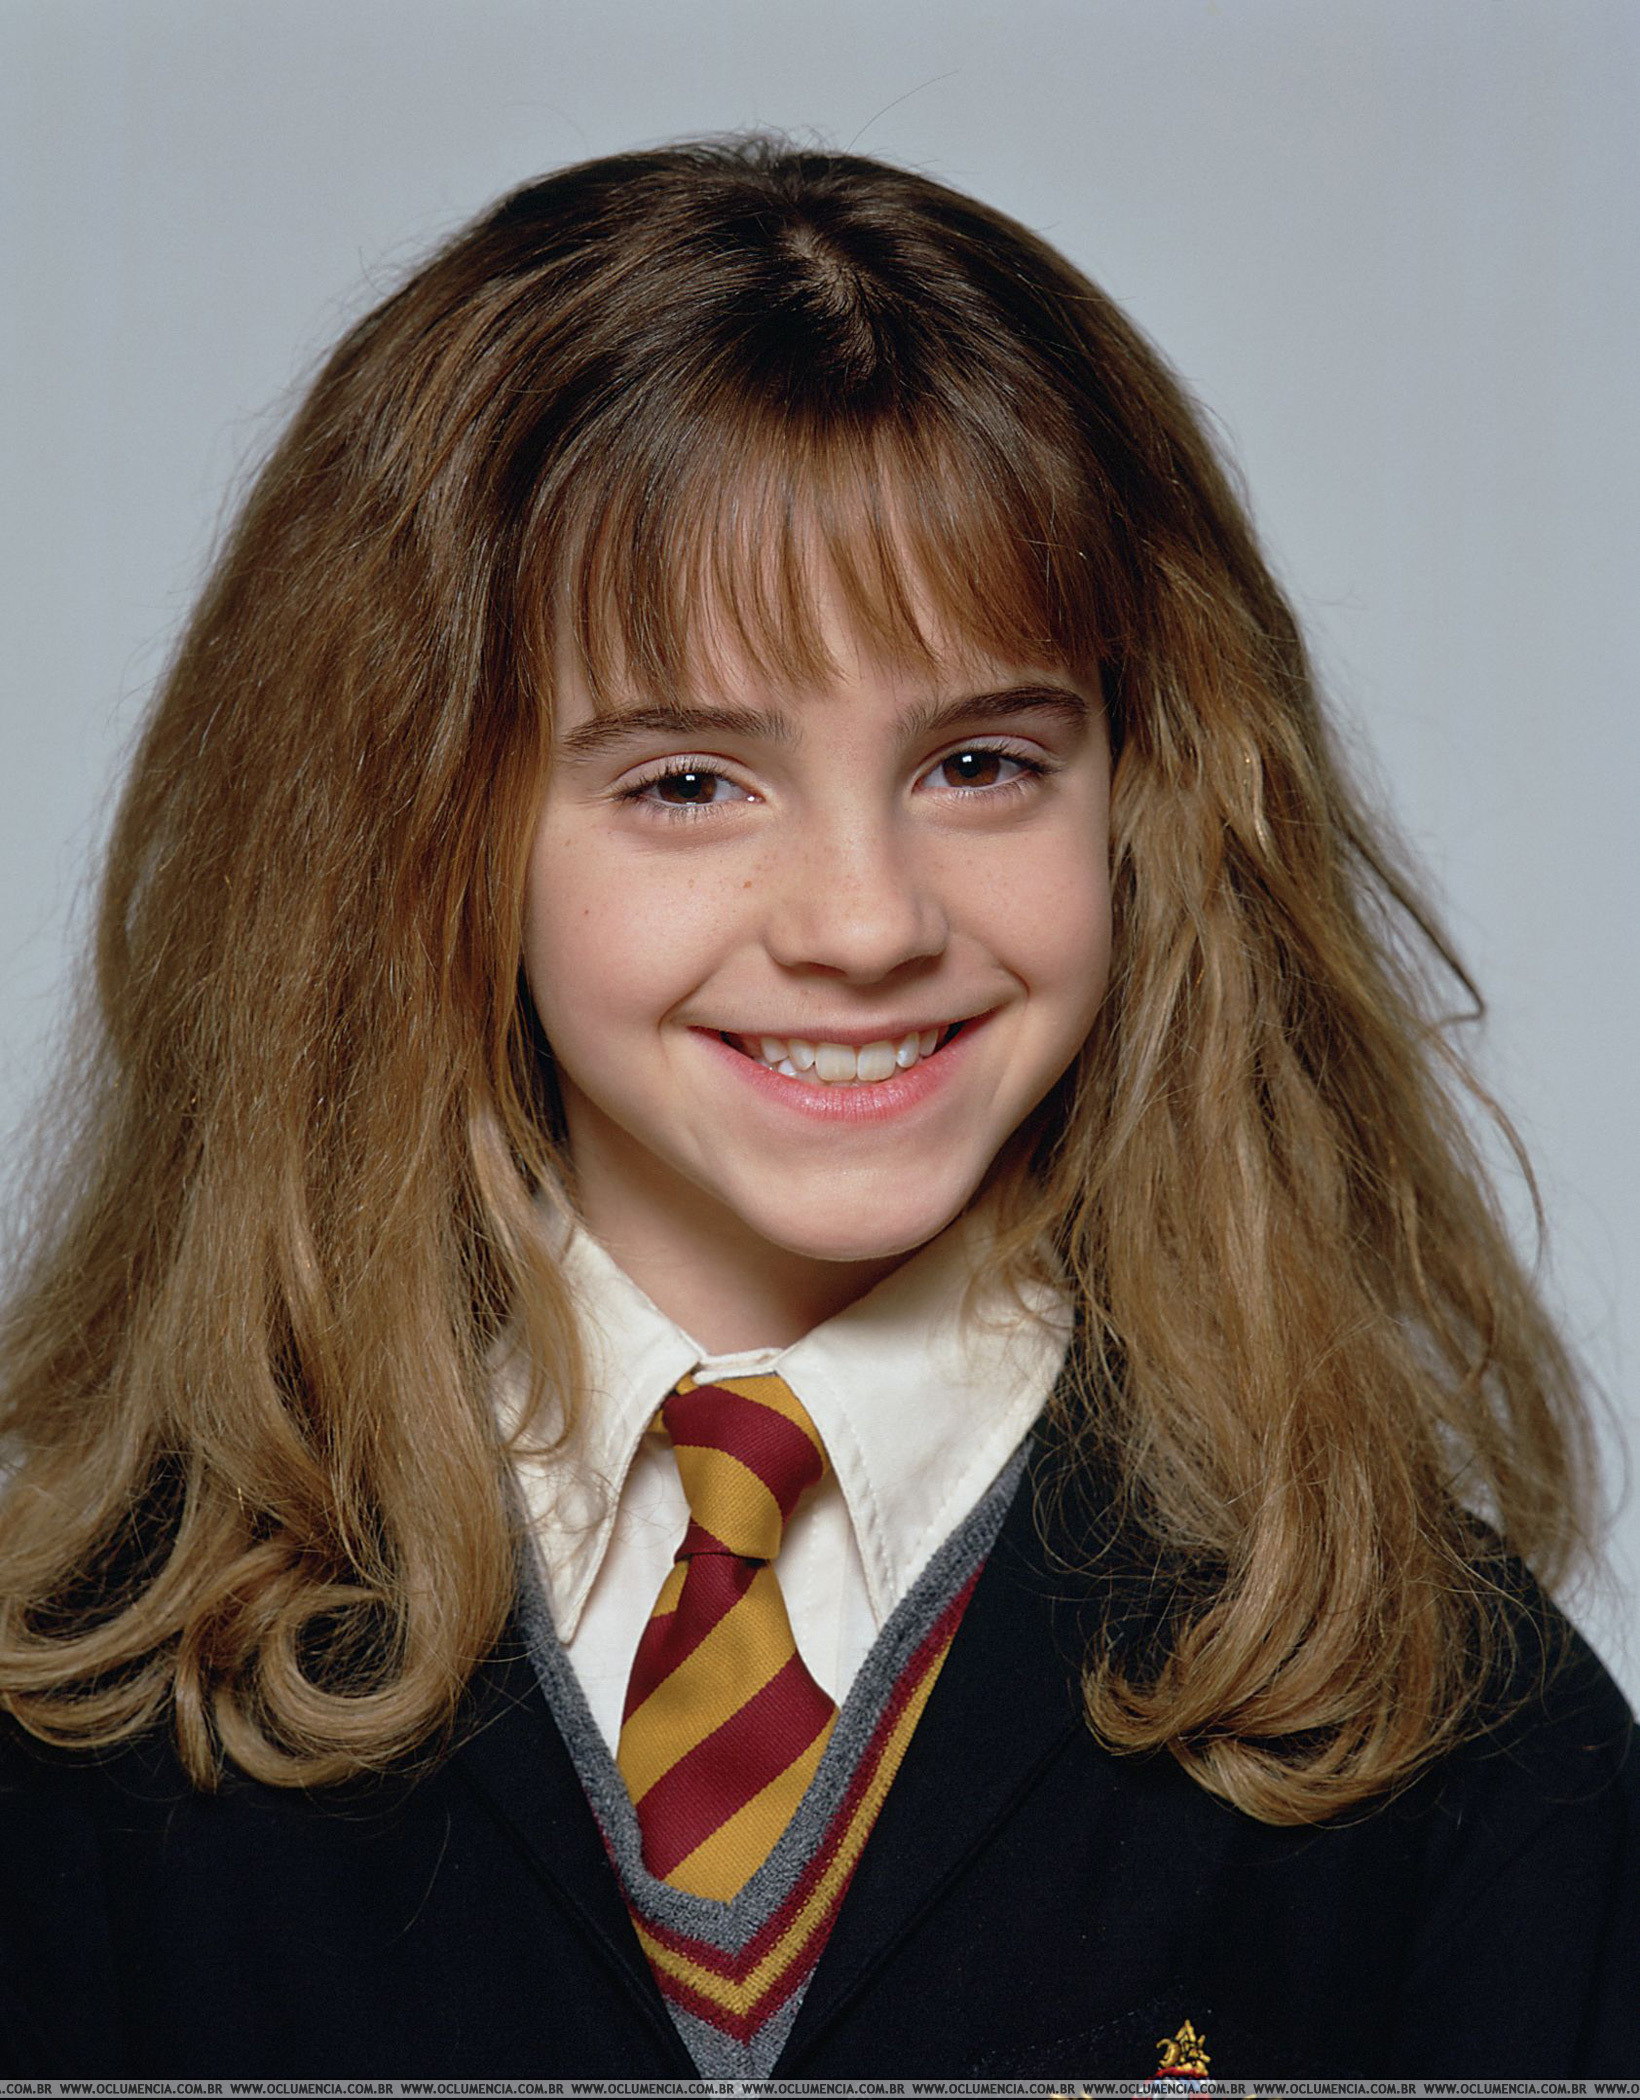 Emma Watson - Harry Potter and the Philosopher's Stone promoshoot (2001